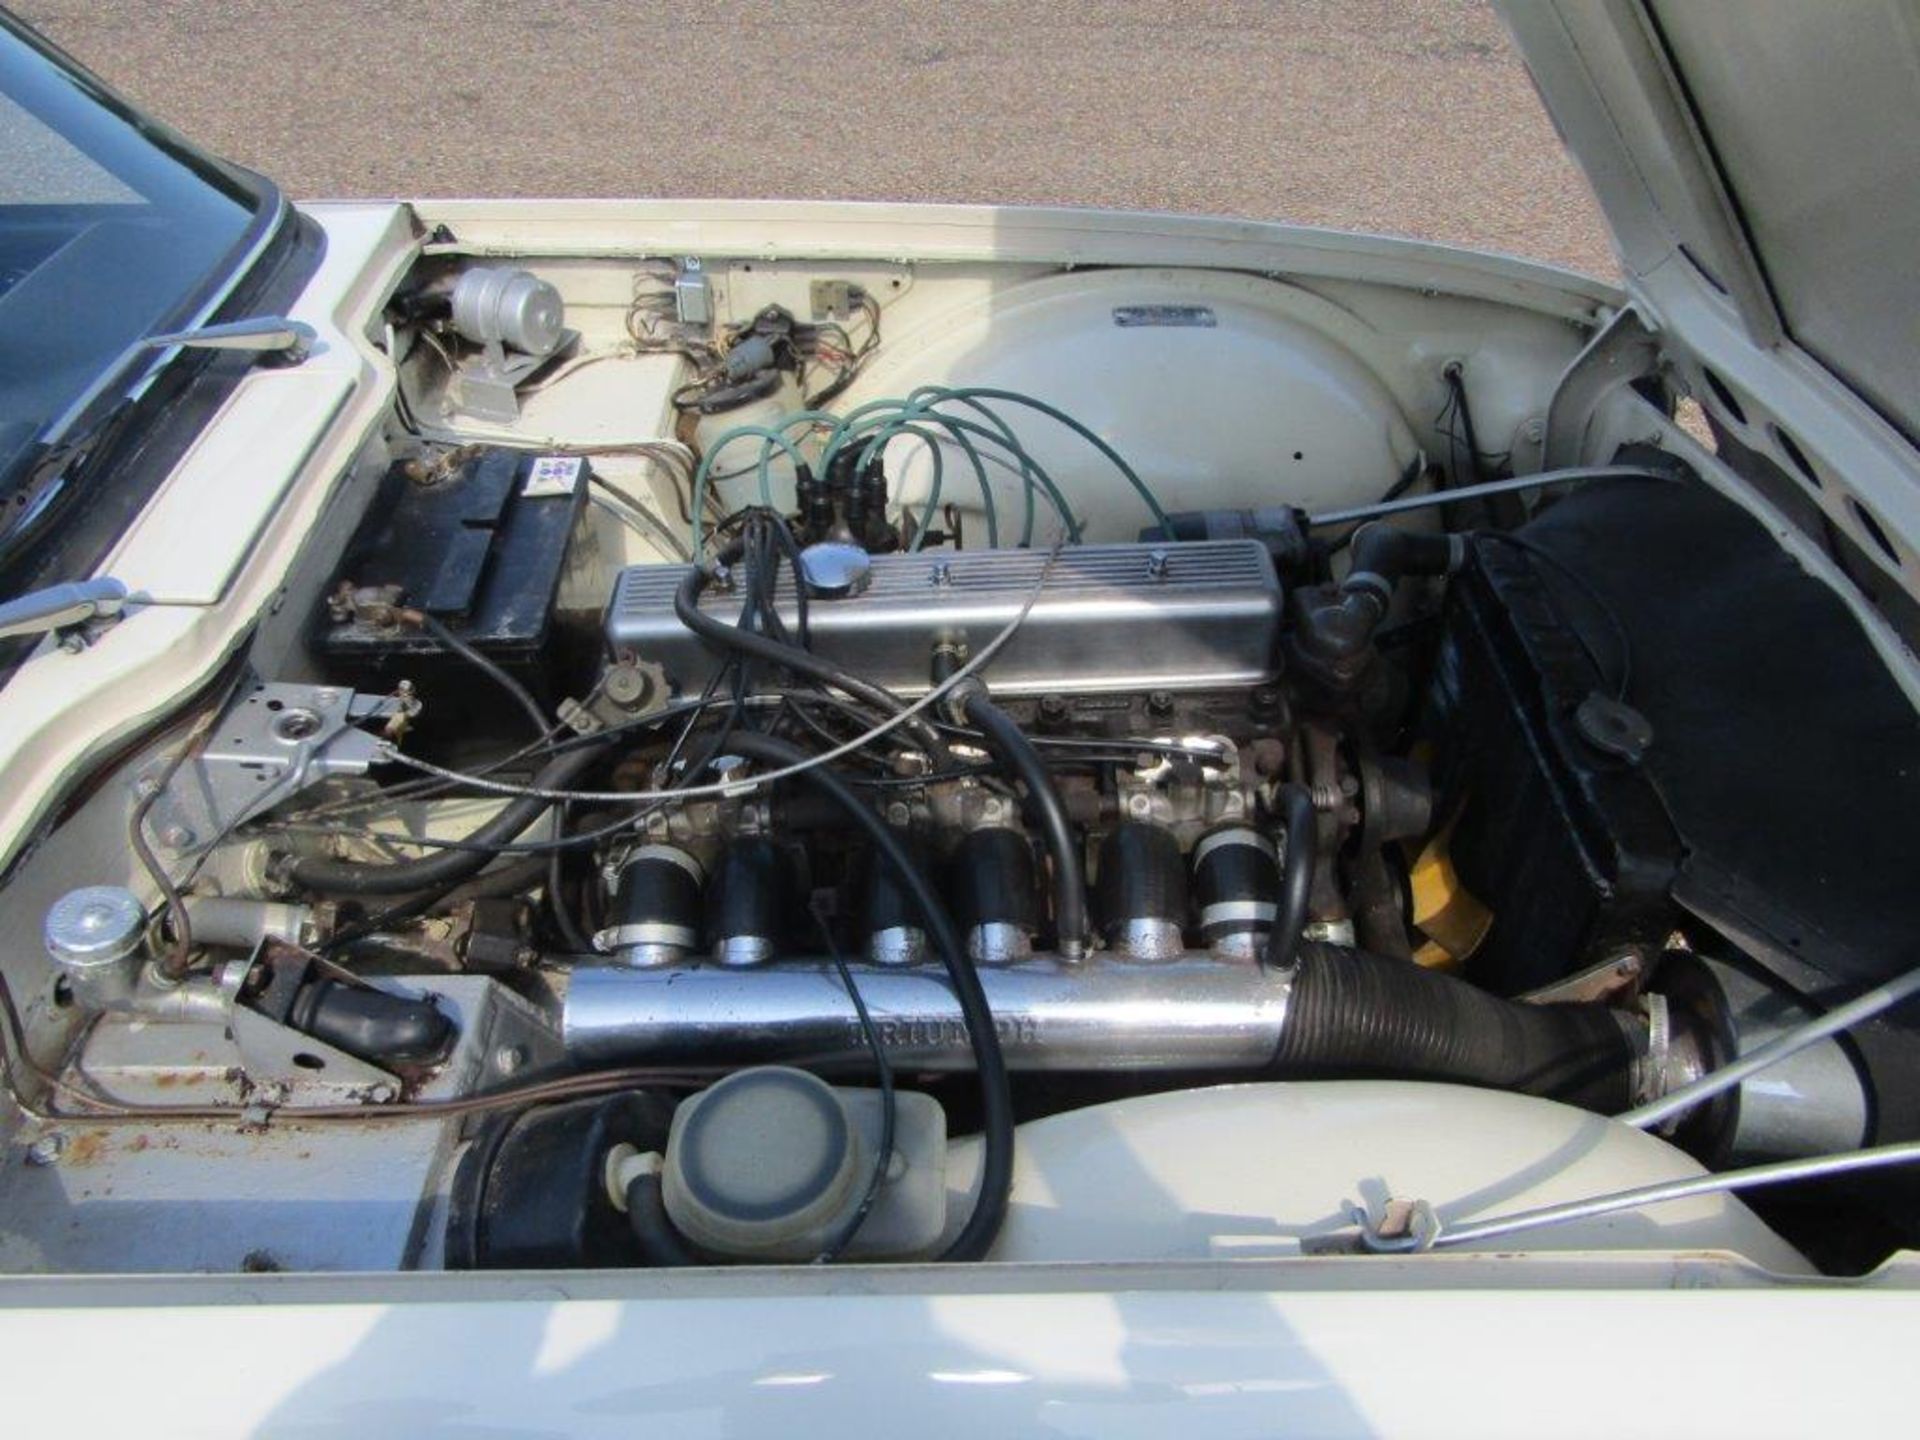 1970 Triumph TR6 Pi - Image 11 of 18